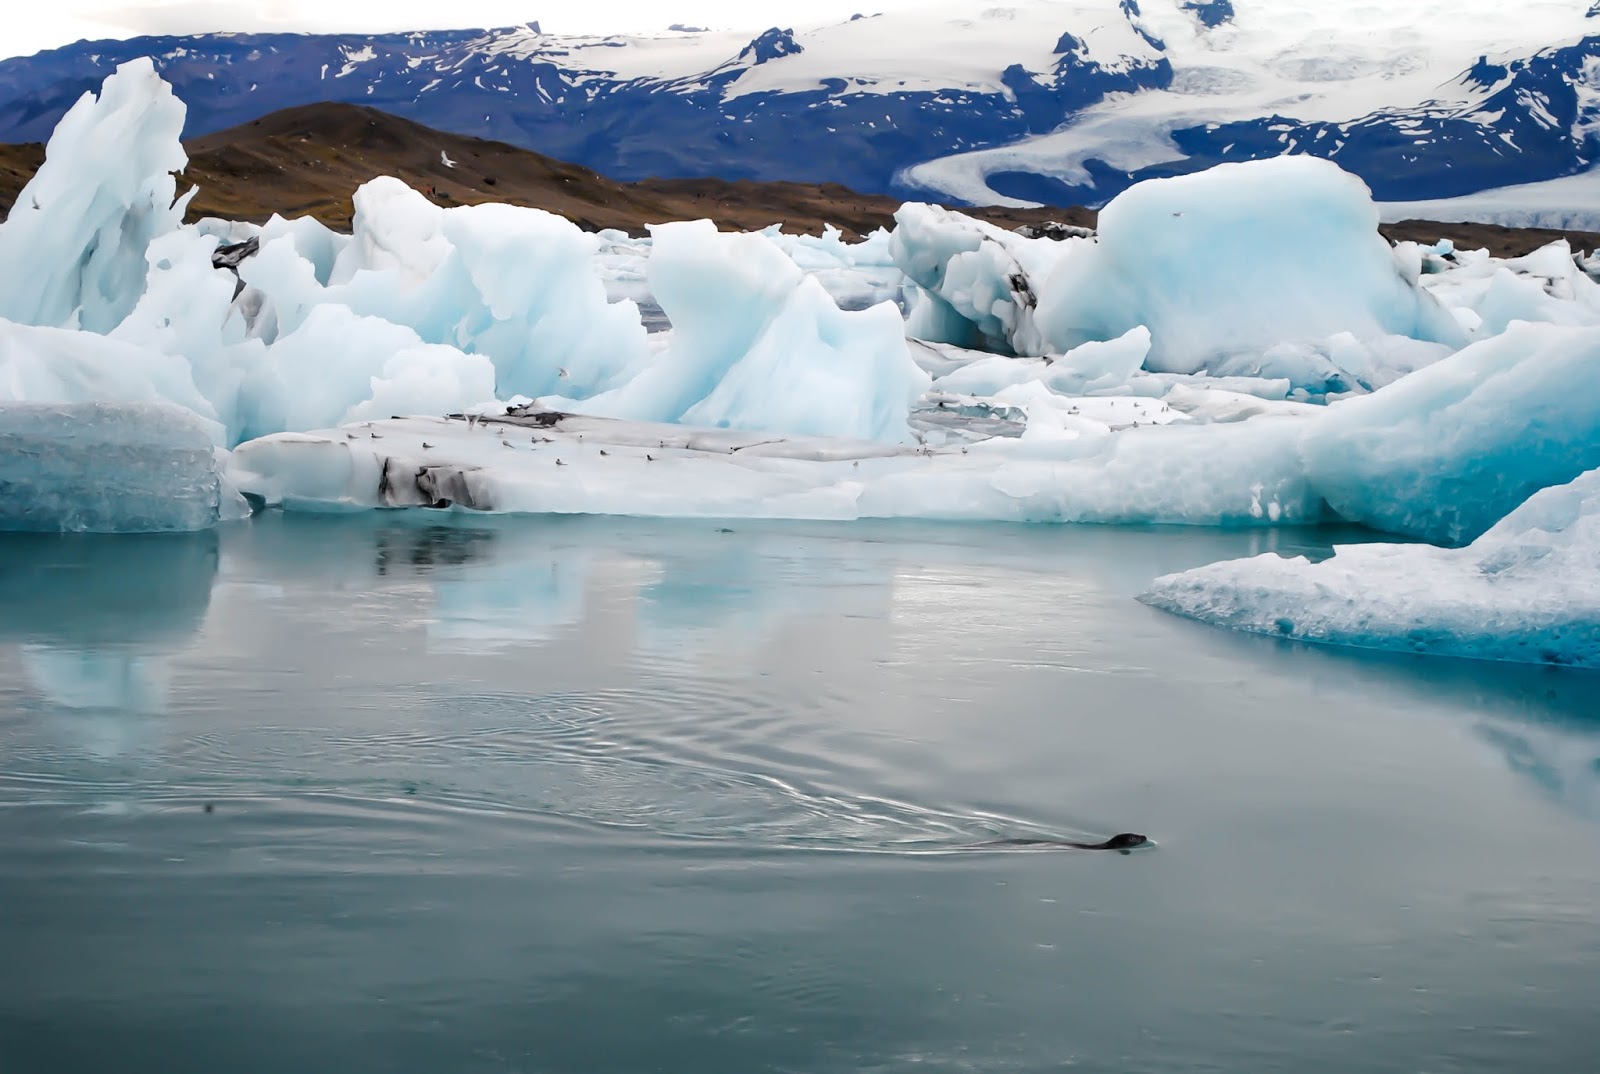 Things to do in Reykjavik Iceland : Take a day trip to the Jokulslaroon Glacier Lagoon